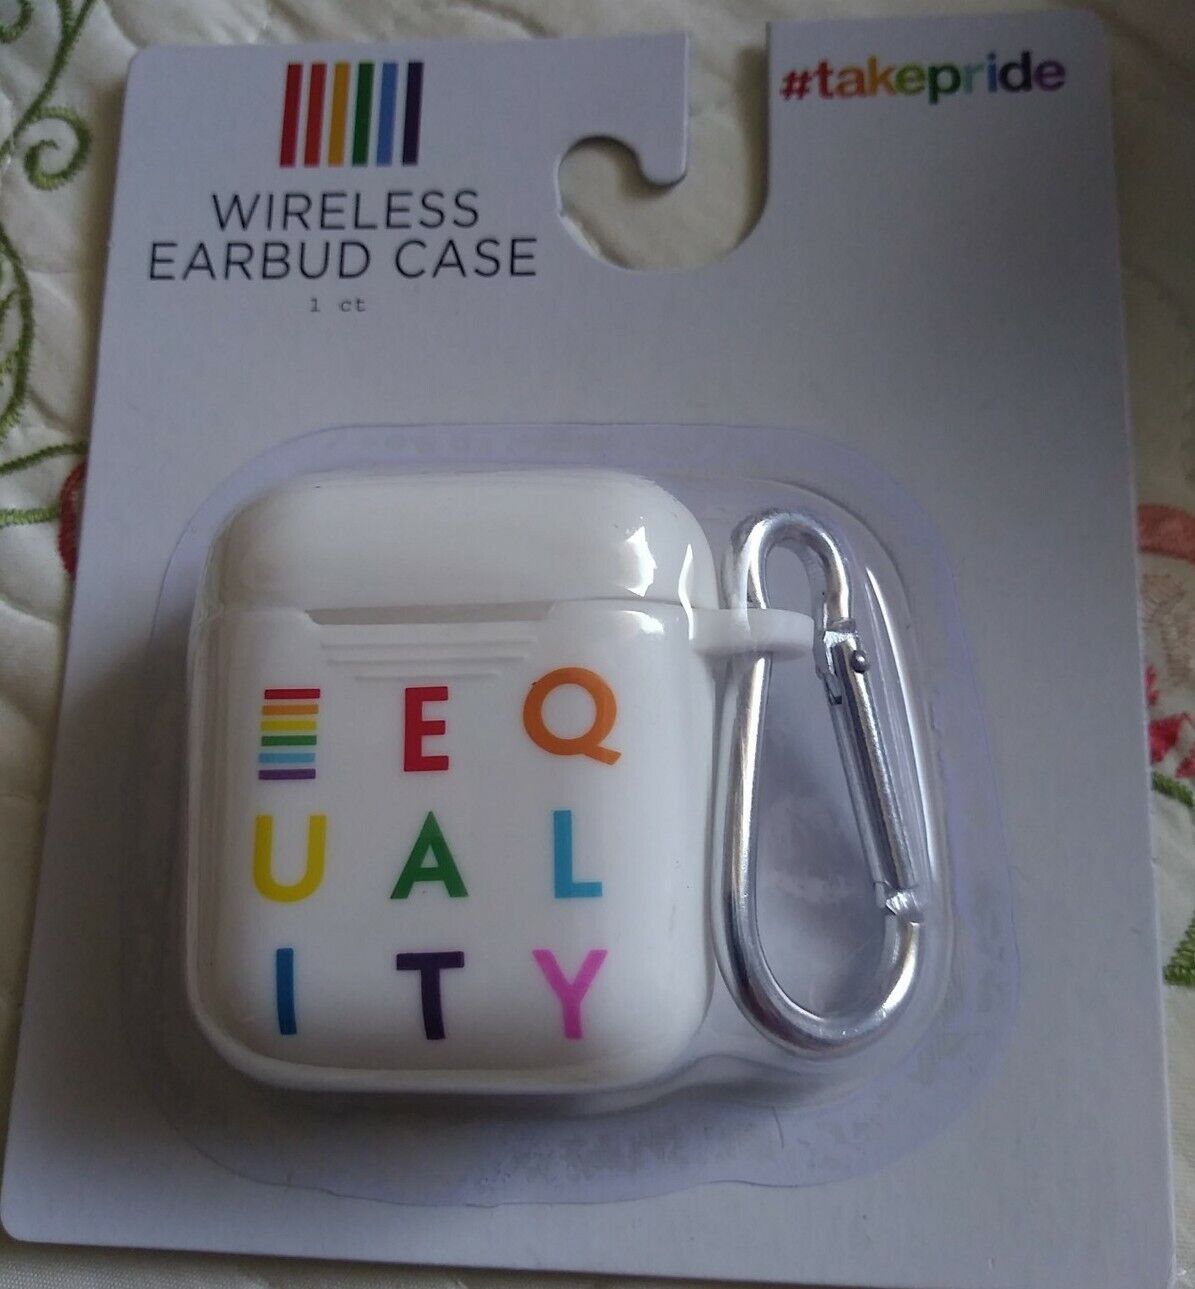 NEW *LOT of 2* Ankyo #takepride "EQUALITY" Wireless Earbud Rubber Case w/ Clip  ANKYO